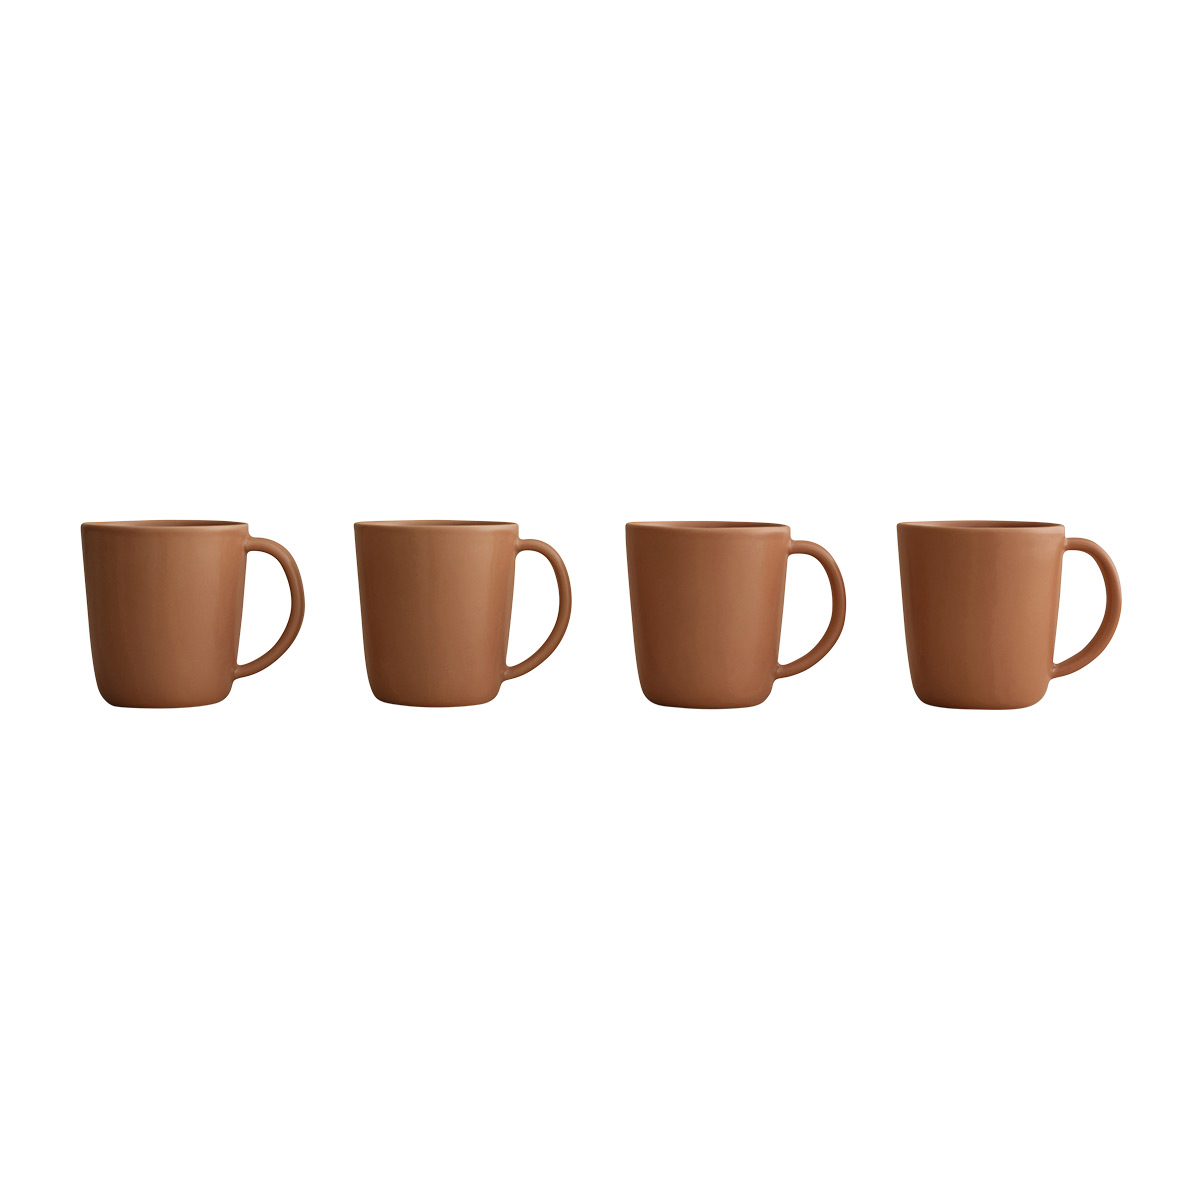 12 Piece Coffee Mugs Set of 4 - Ceramic Coffee Cups